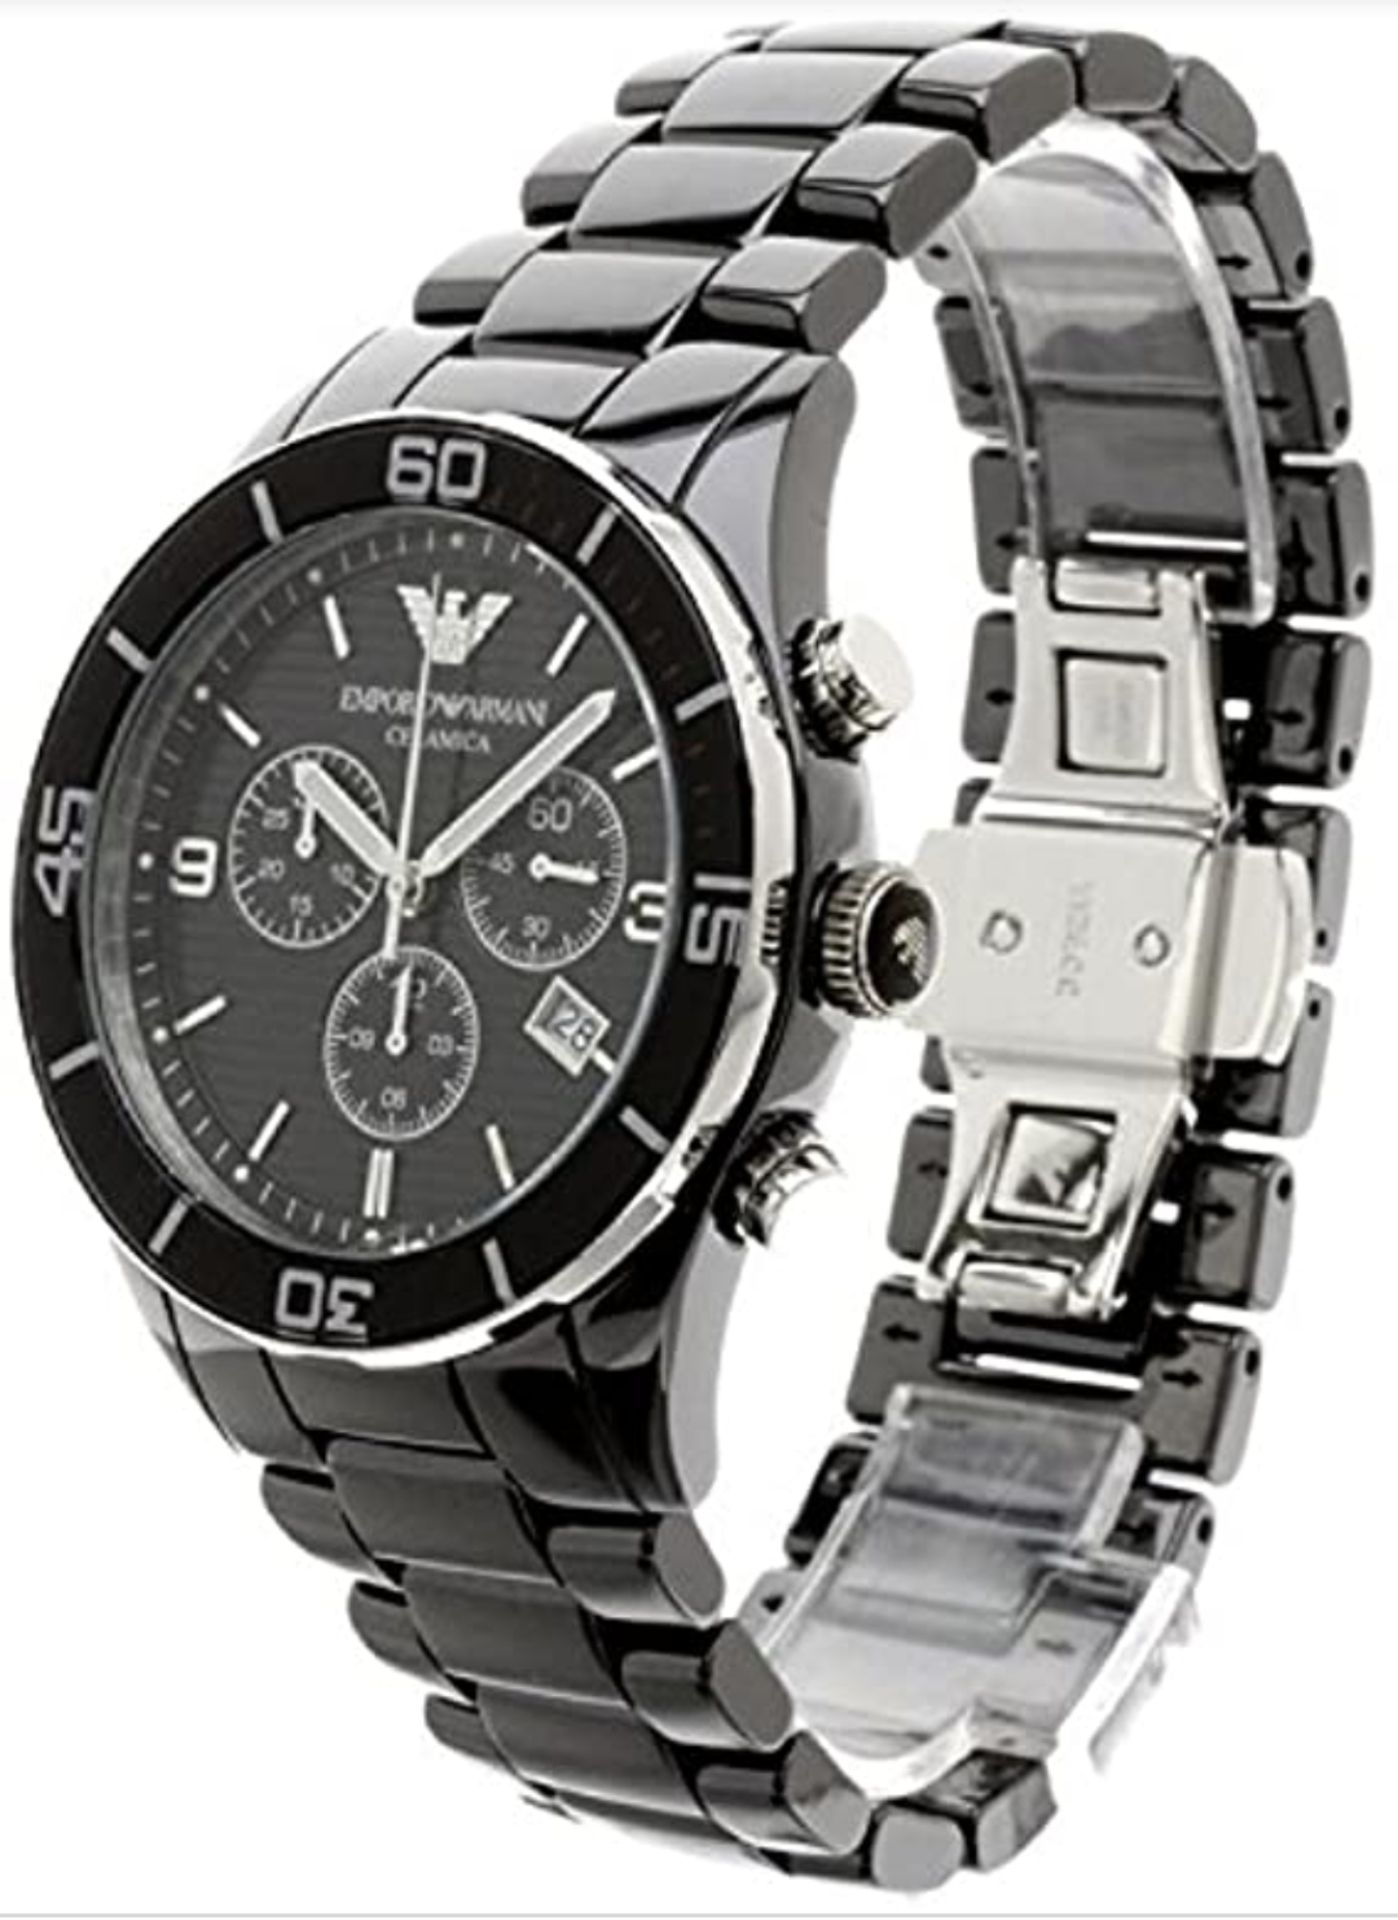 Emporio Armani AR1421 Men's Black Ceramica Chronograph Watch - Image 4 of 6